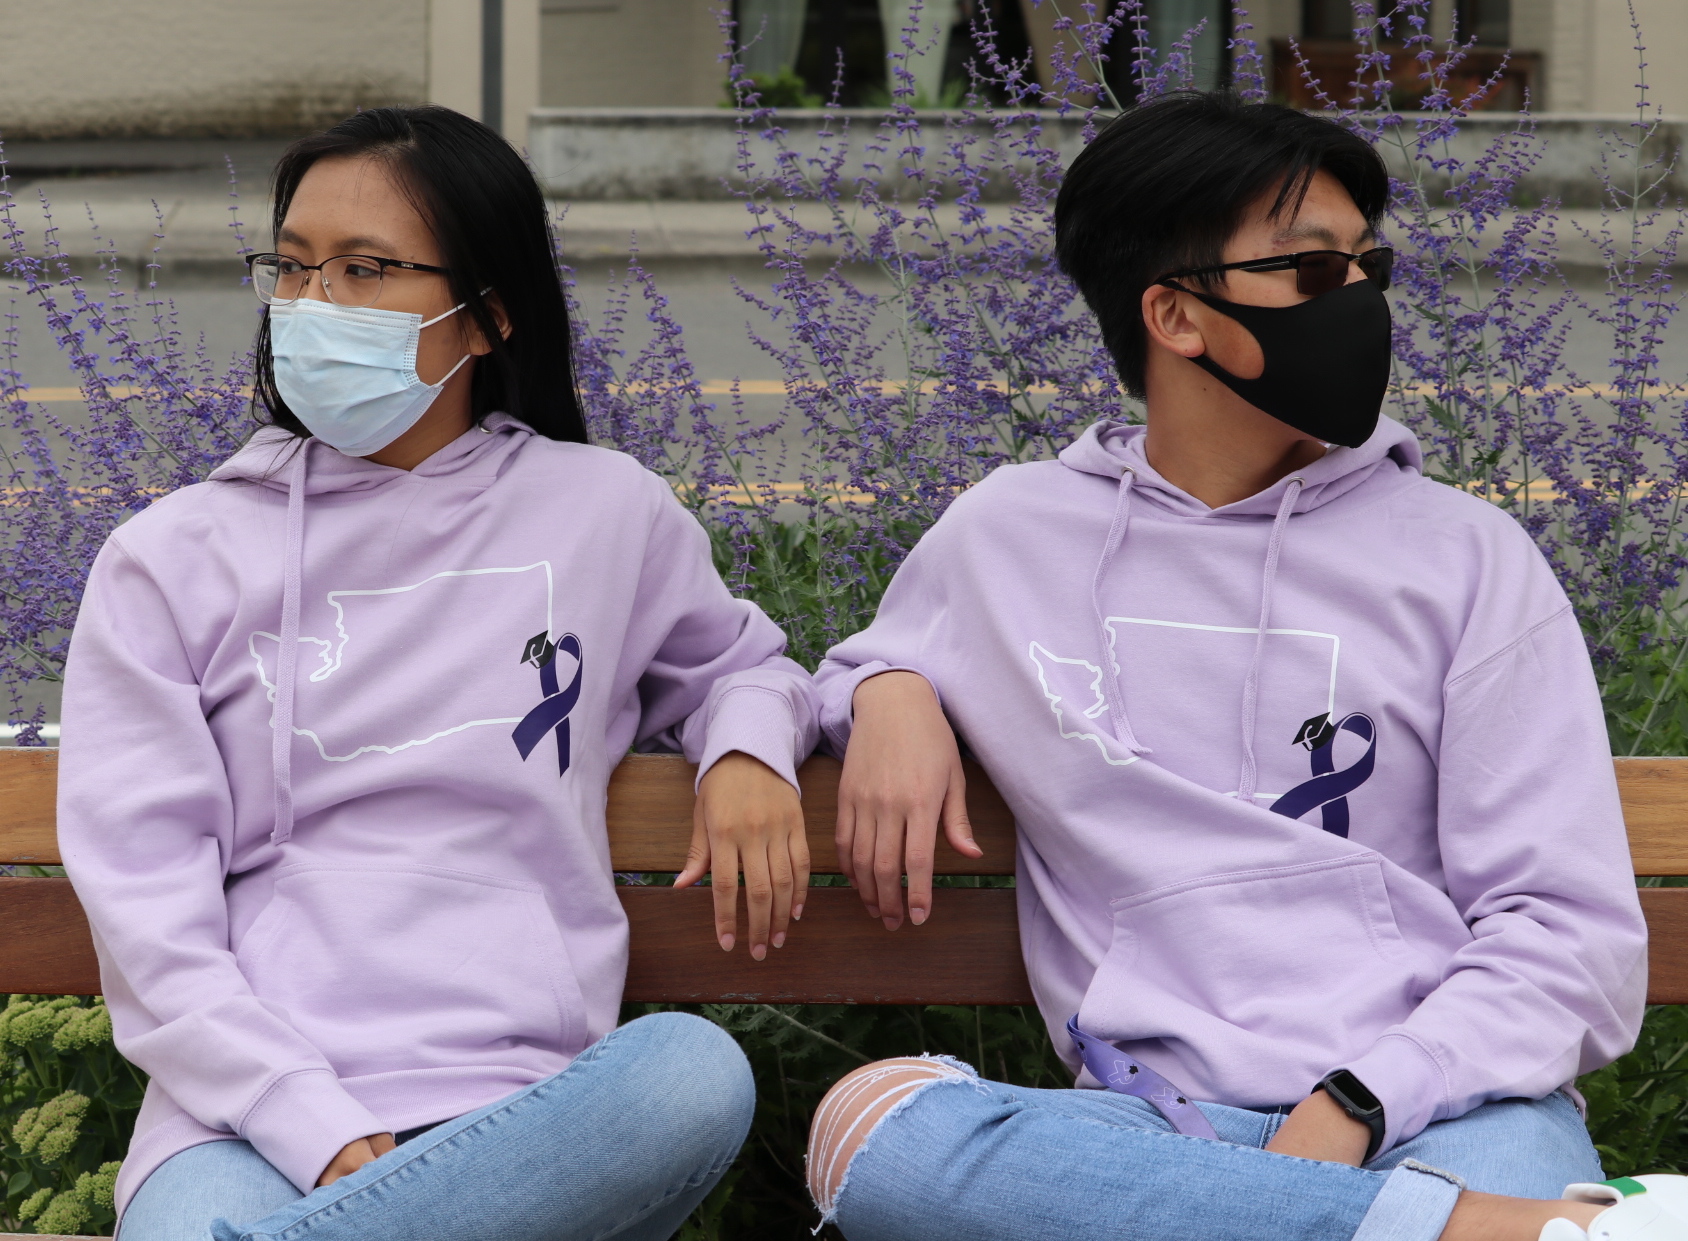 WASCAA Sweatshirts worn by students on bench